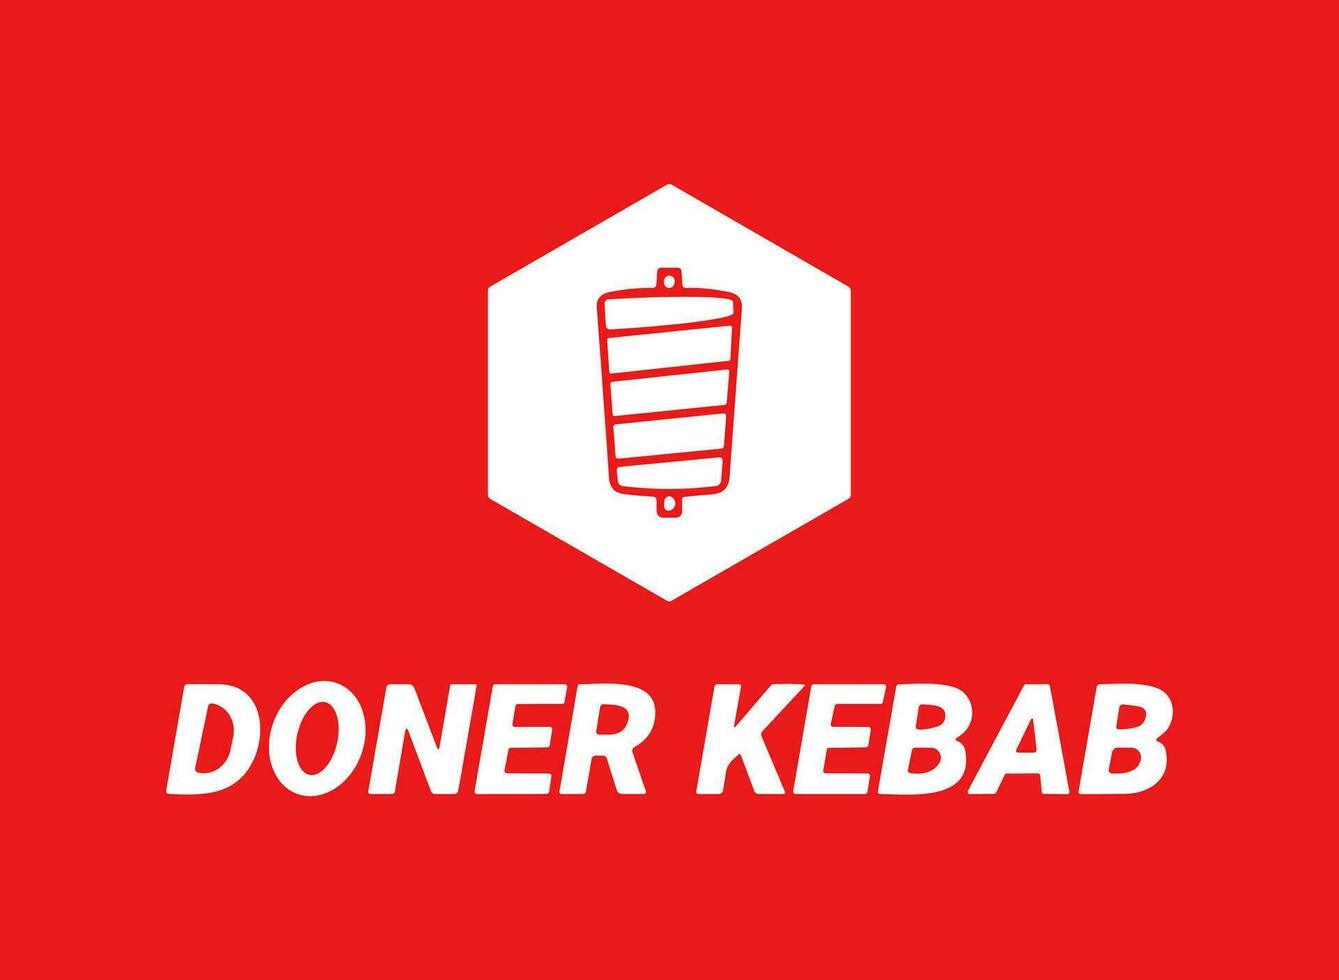 Shawarma logo for restaurants and markets. Doner kebab logo template. vector